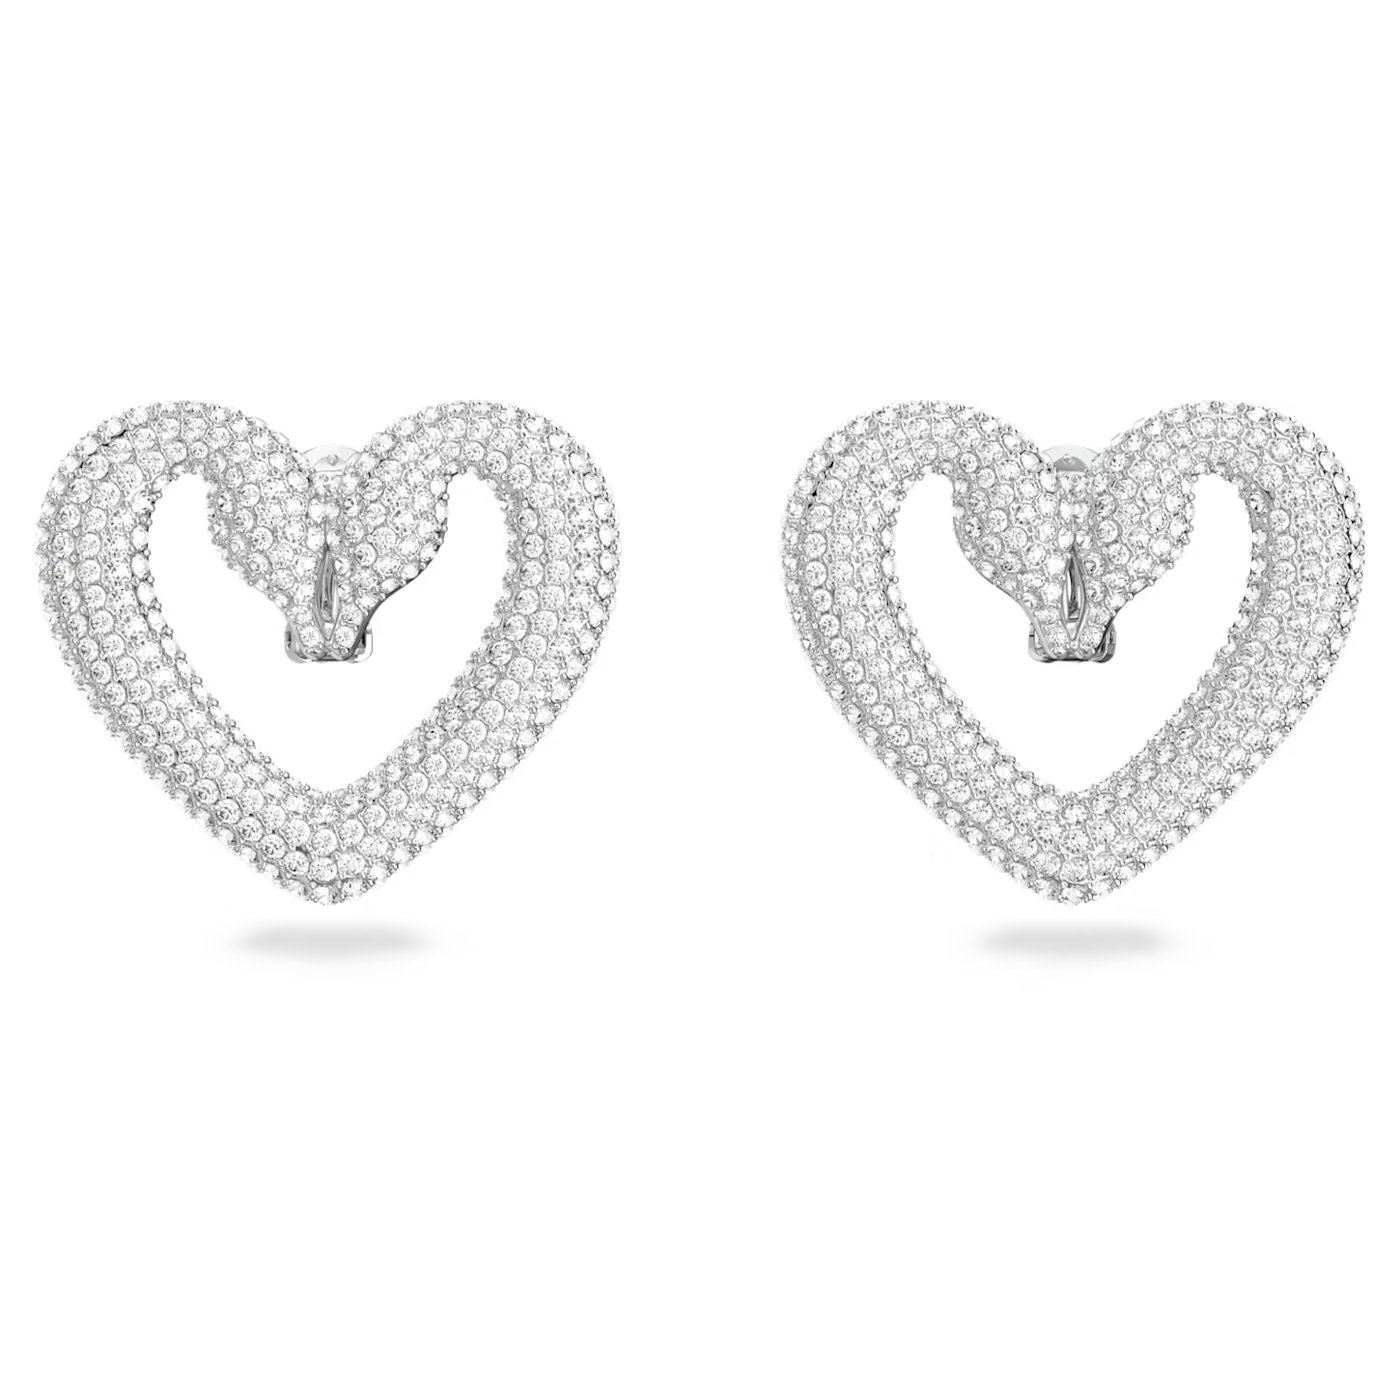 62e8dcdcf08ab_px-una-clip-earrings--heart--large--white--rhodium-plated-swarovski-5626172.jpg